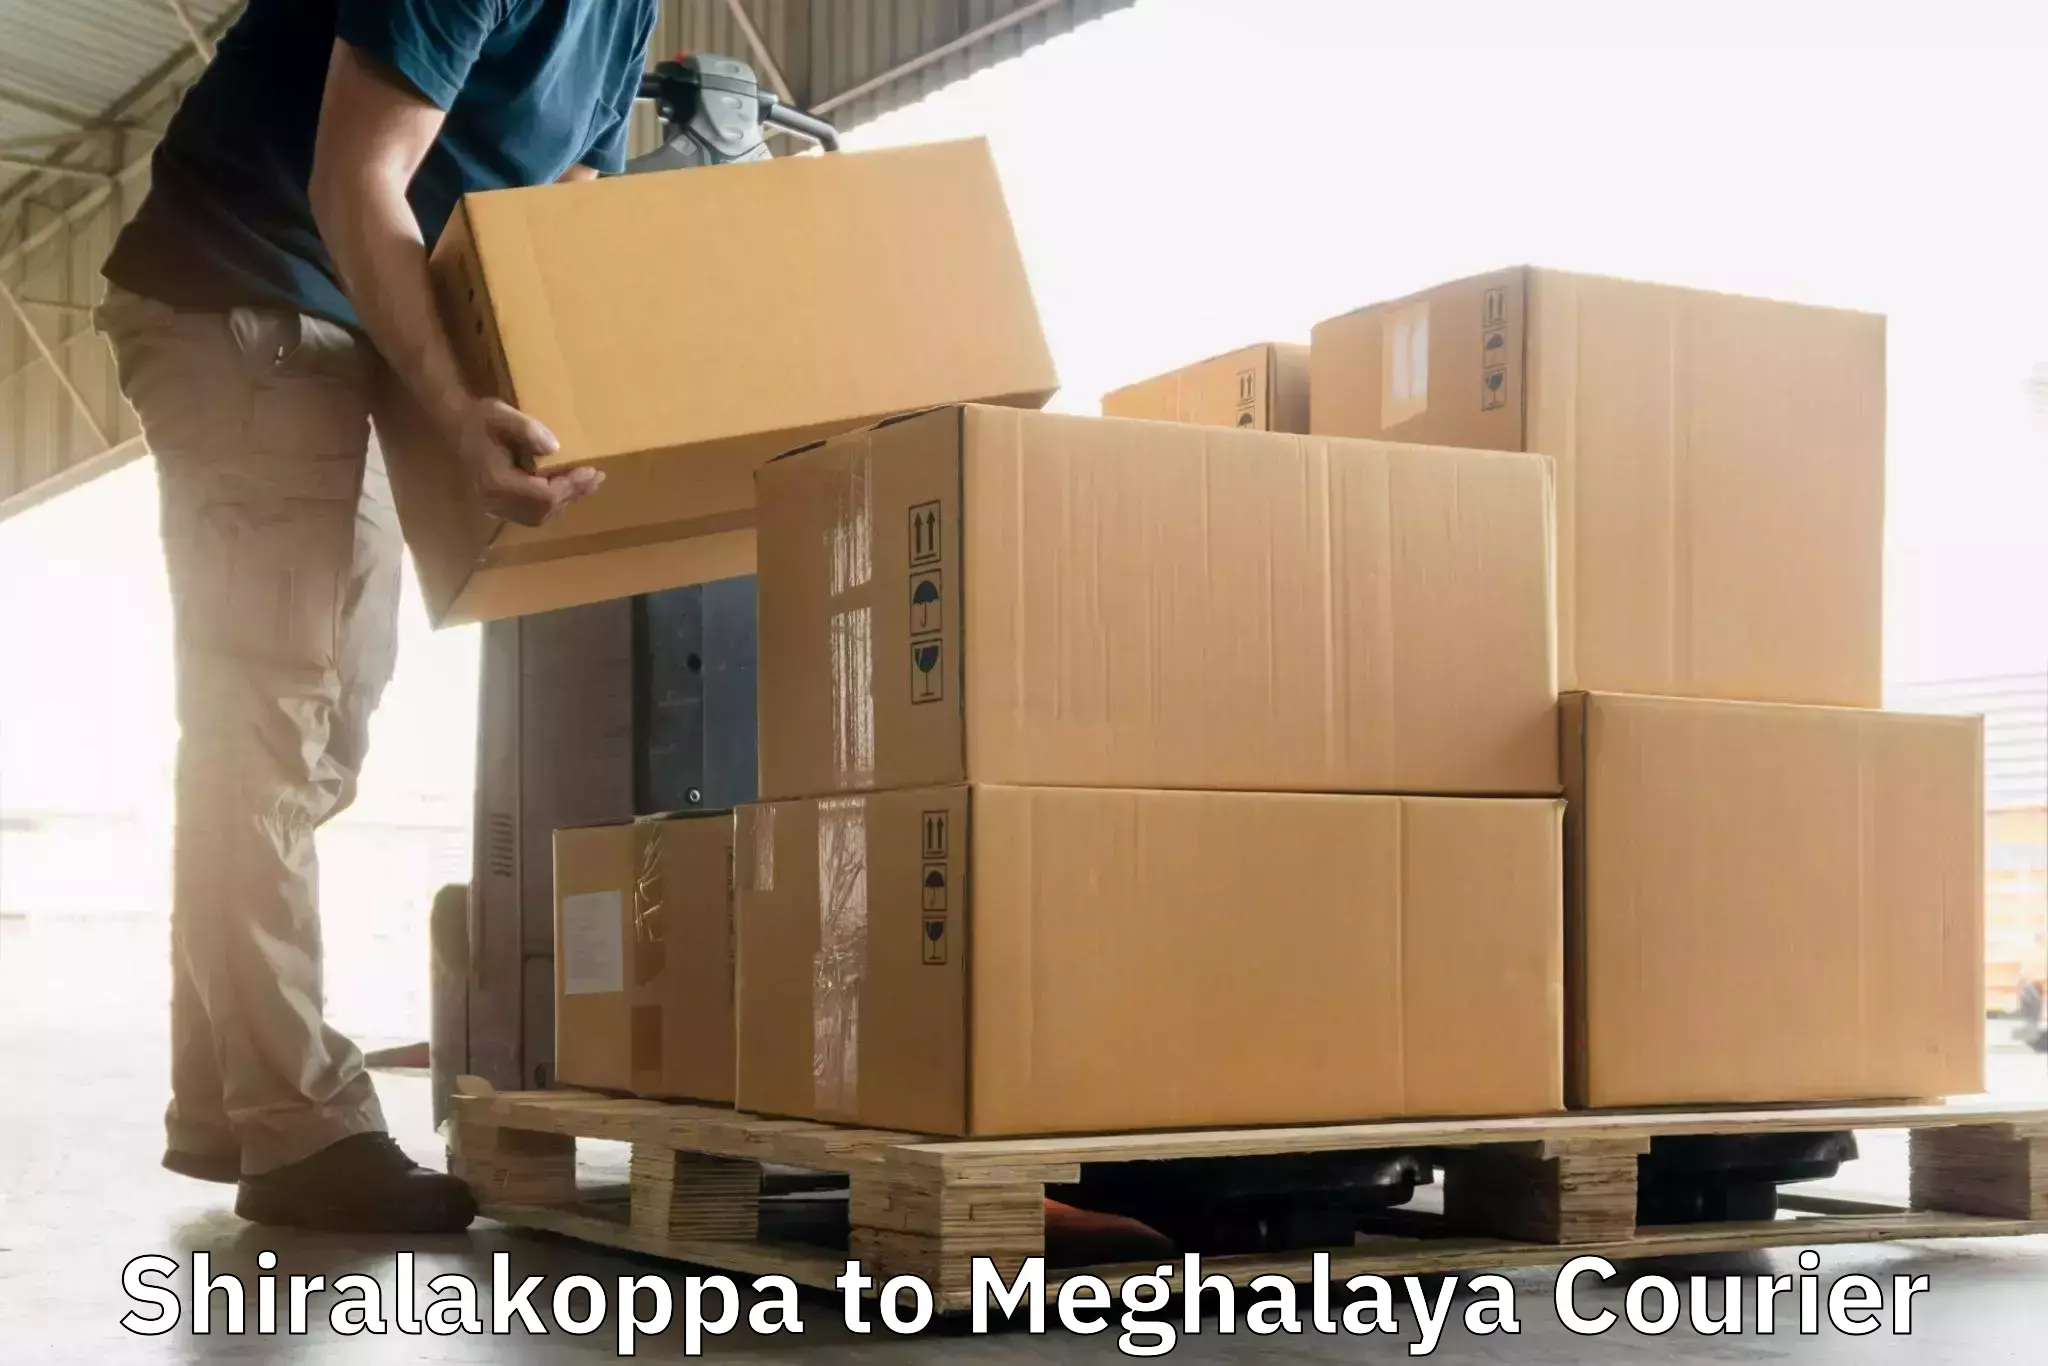 Express delivery capabilities Shiralakoppa to Meghalaya